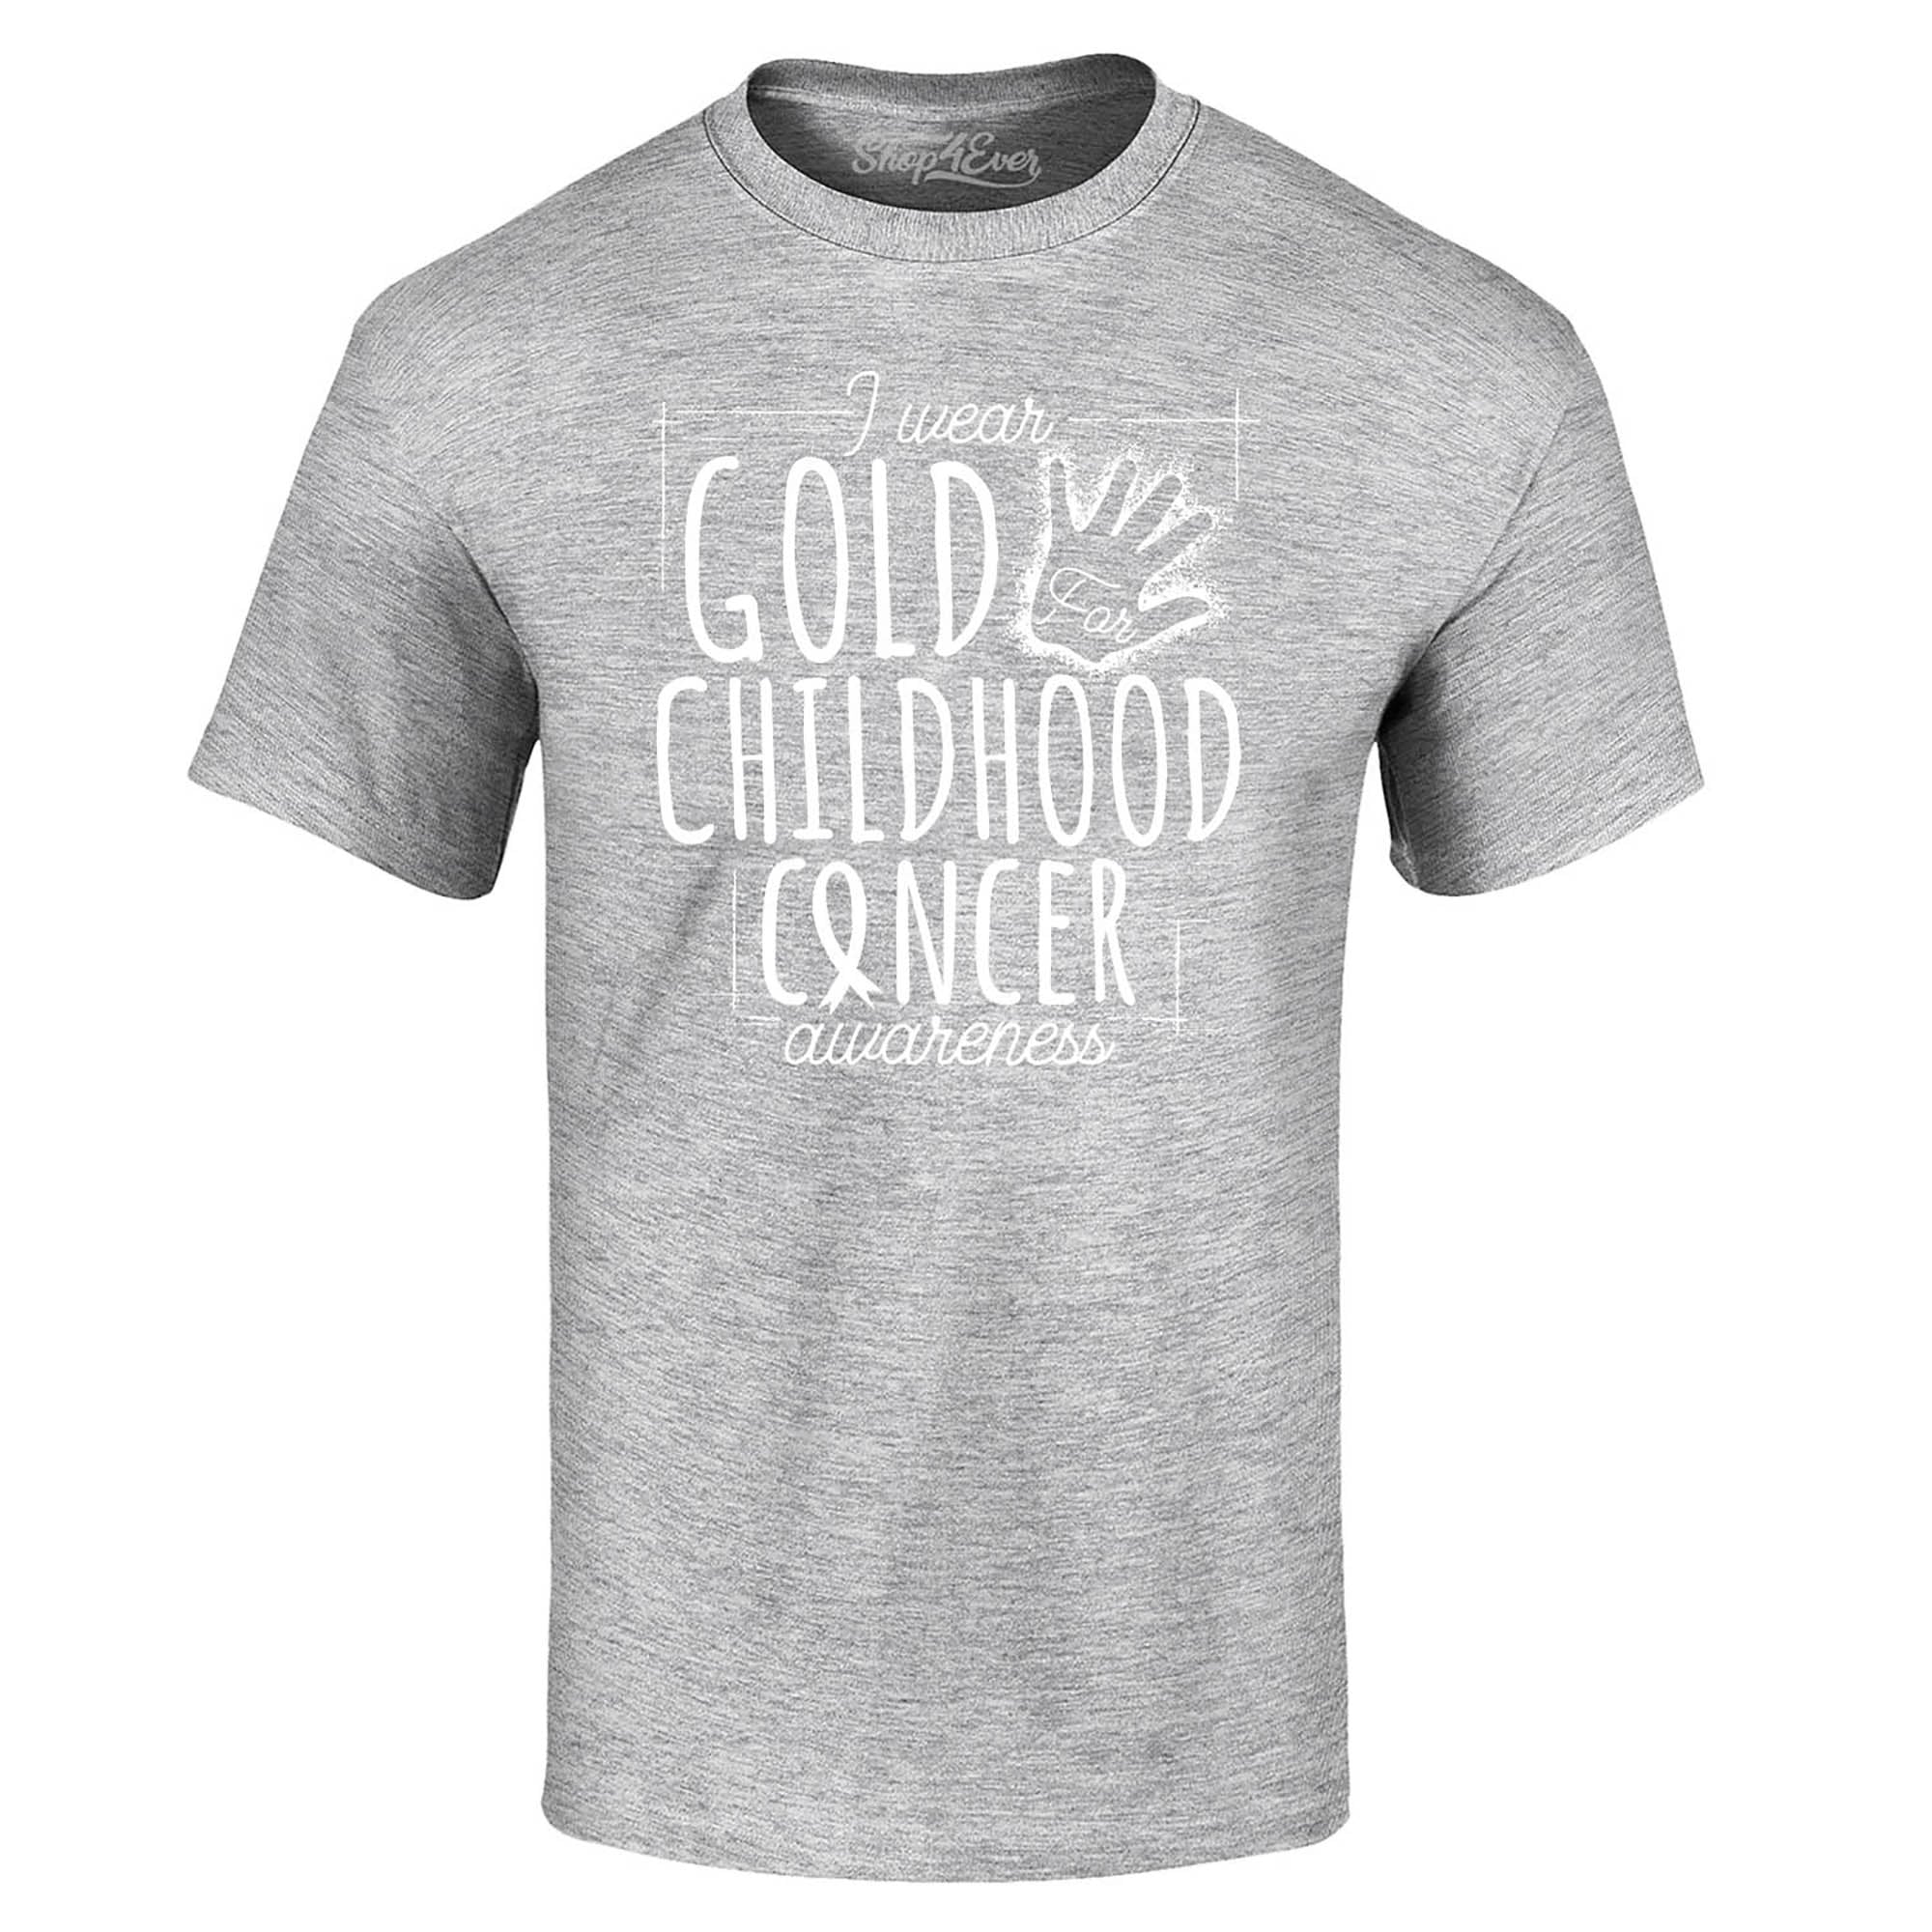 I Wear Gold for Childhood Cancer Awareness T-Shirt